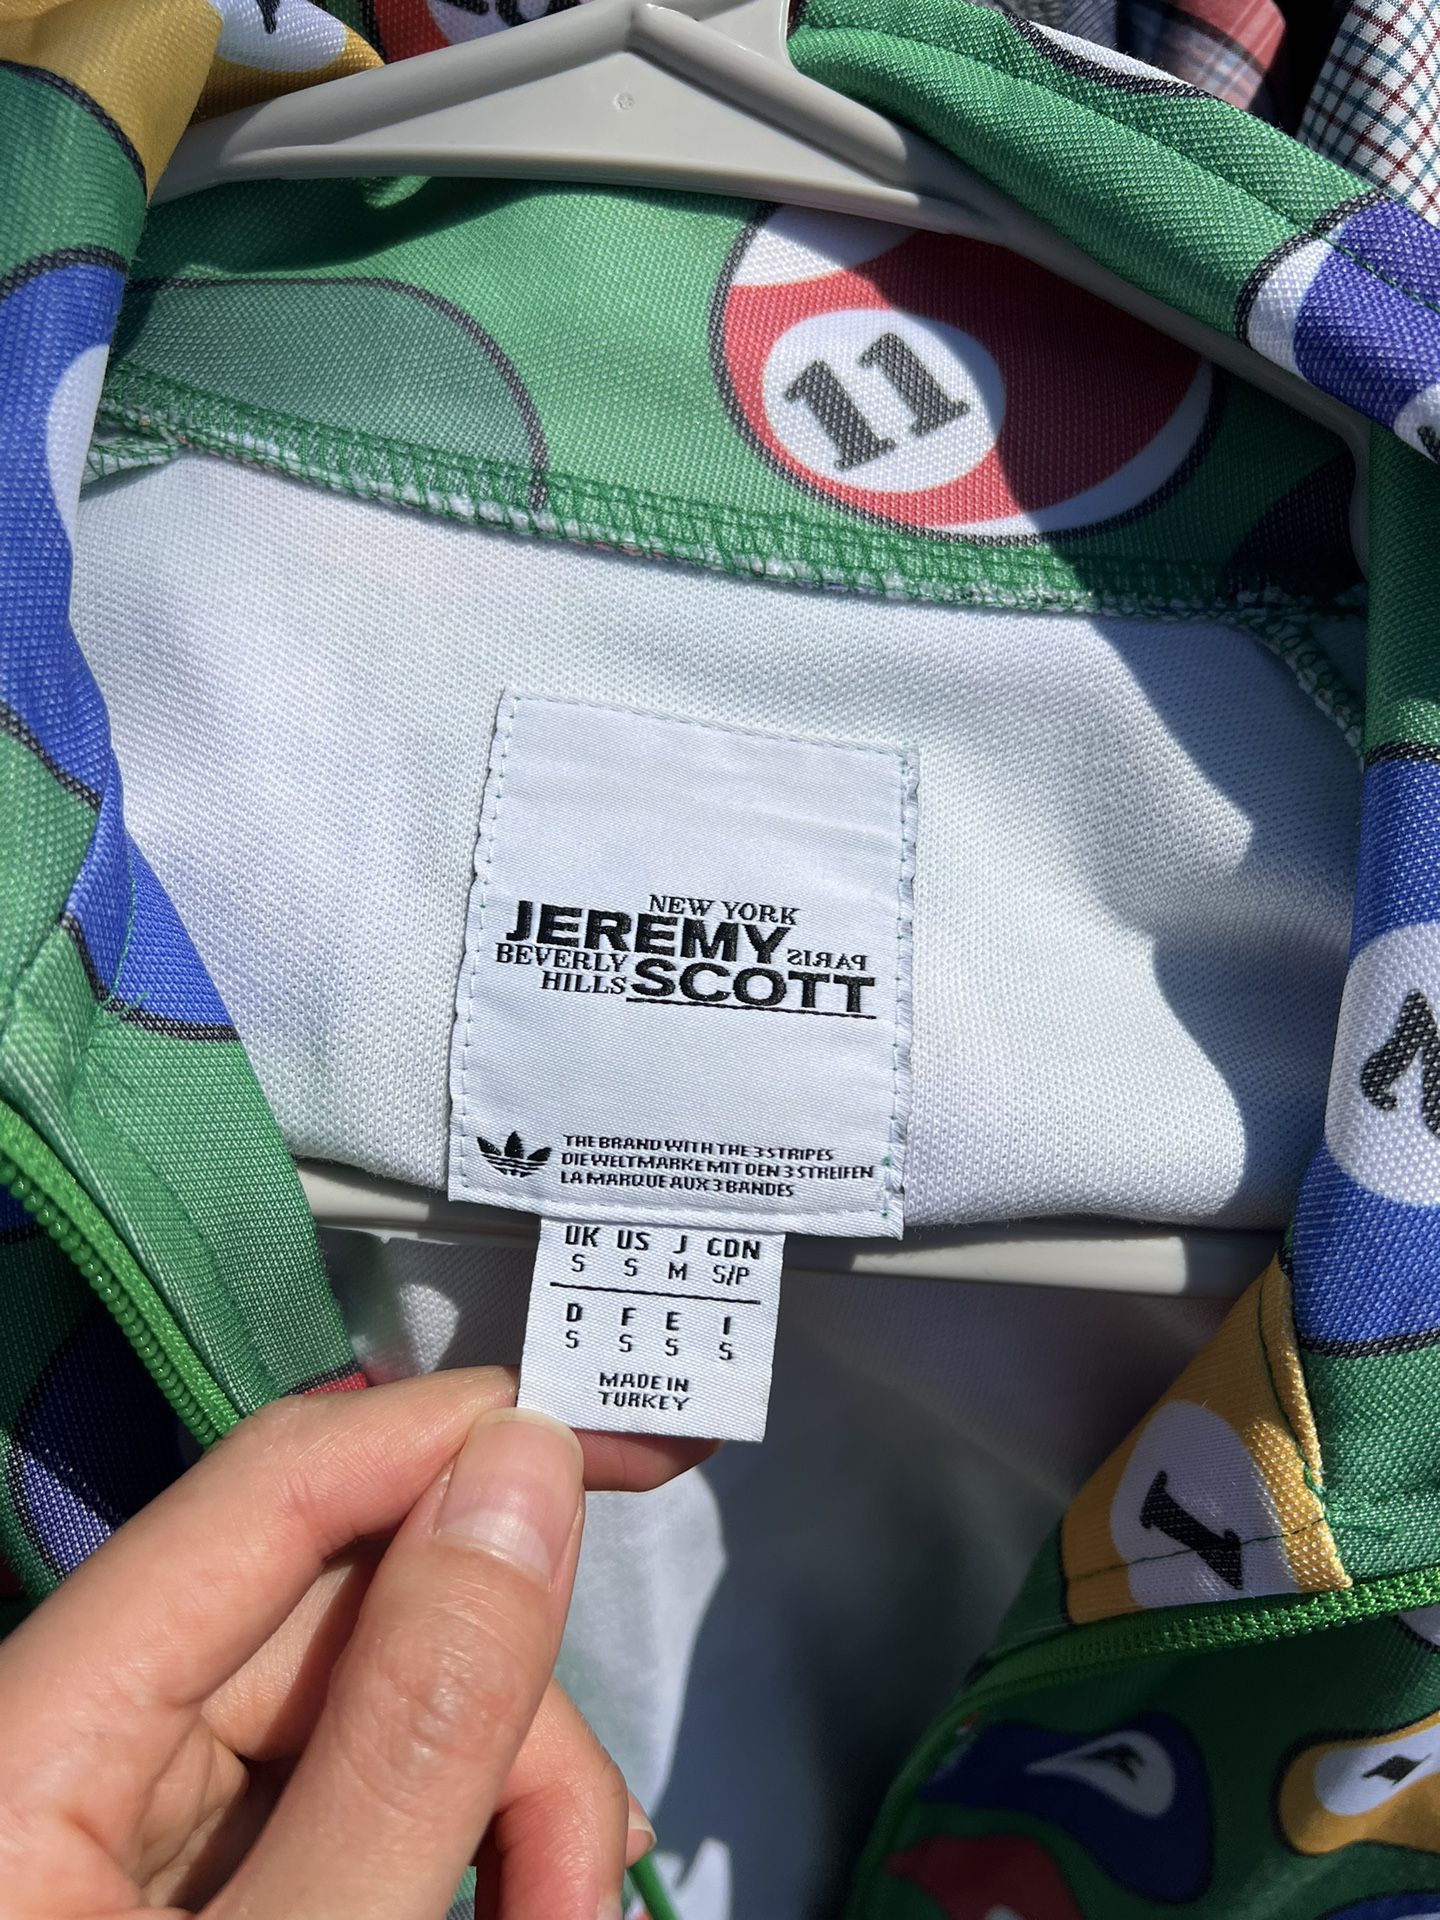 Jeremy Scott - Adidas Jersey